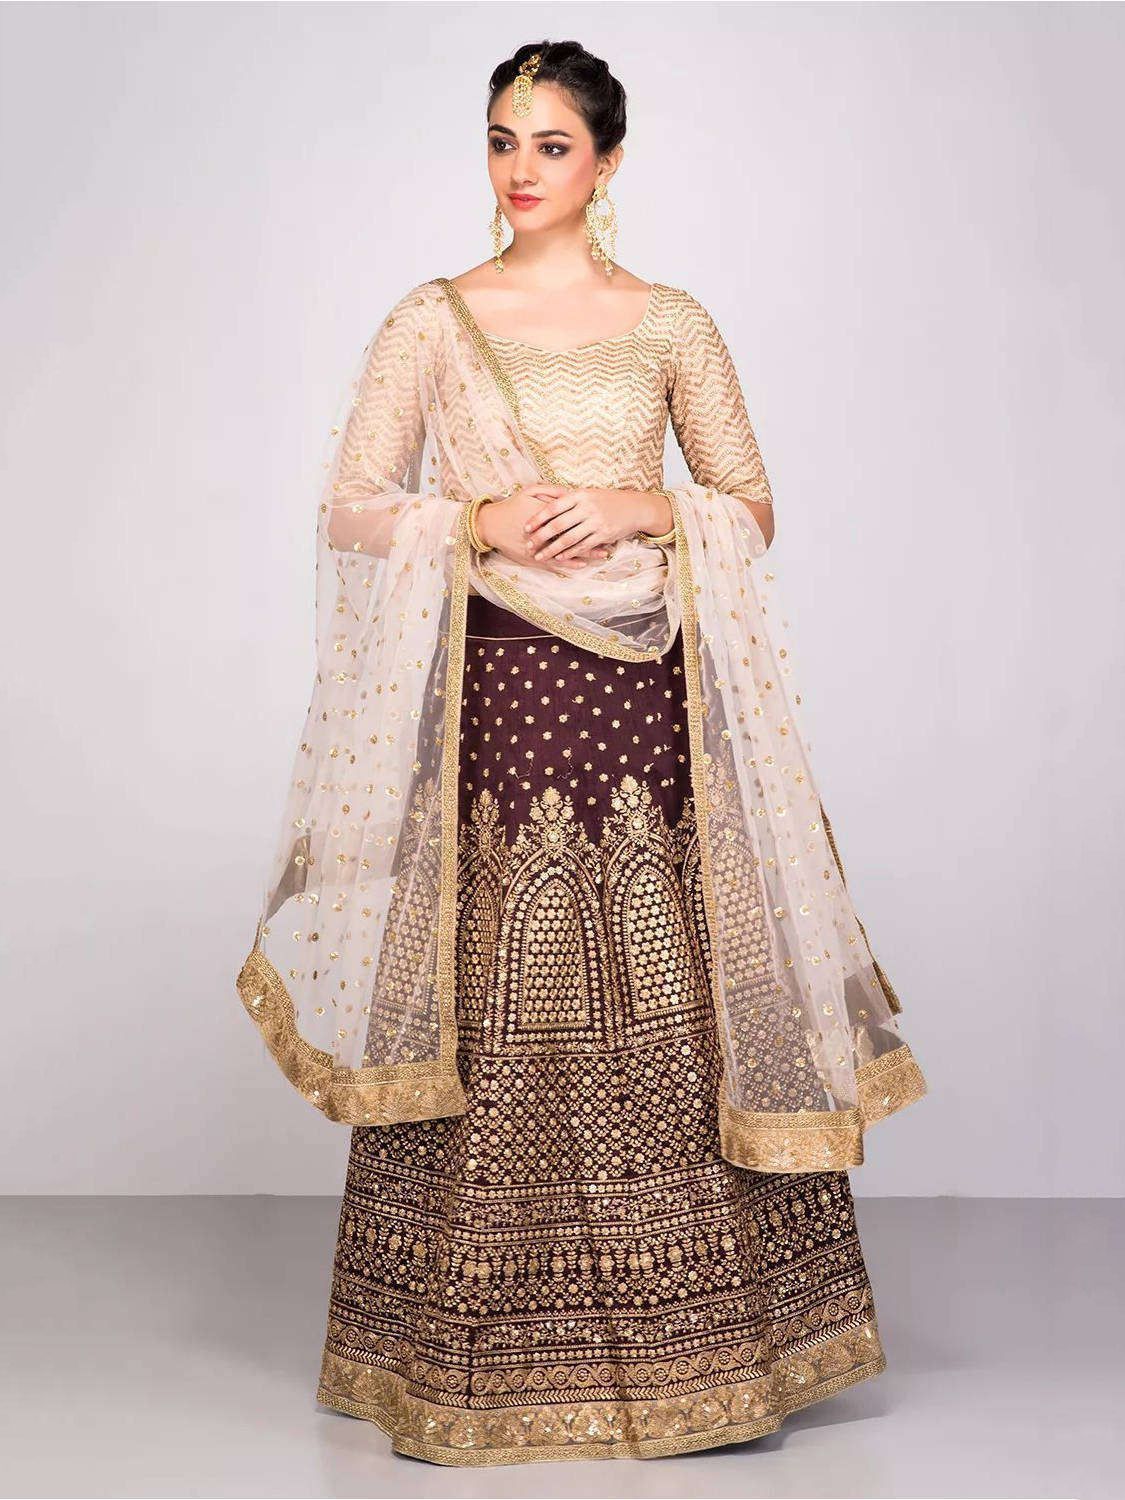 Buy Stunning Maroon Colored Designer Embroidered Banglori Silk Lehenga Choli for womens online India